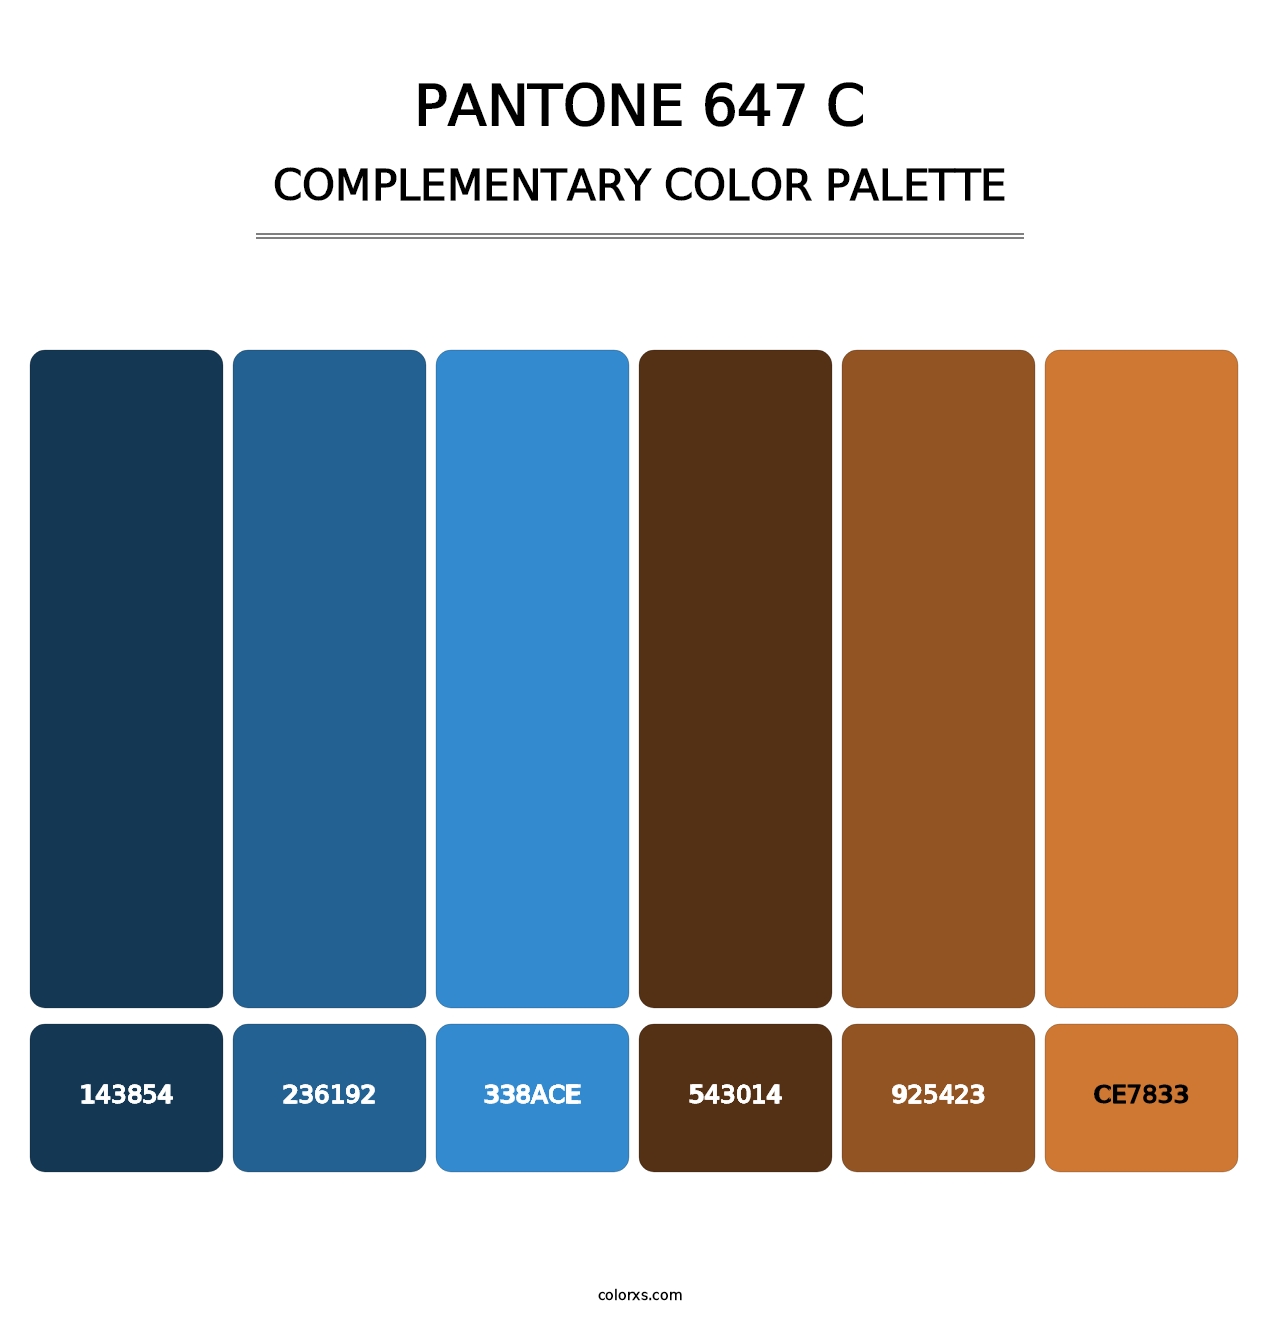 PANTONE 647 C - Complementary Color Palette